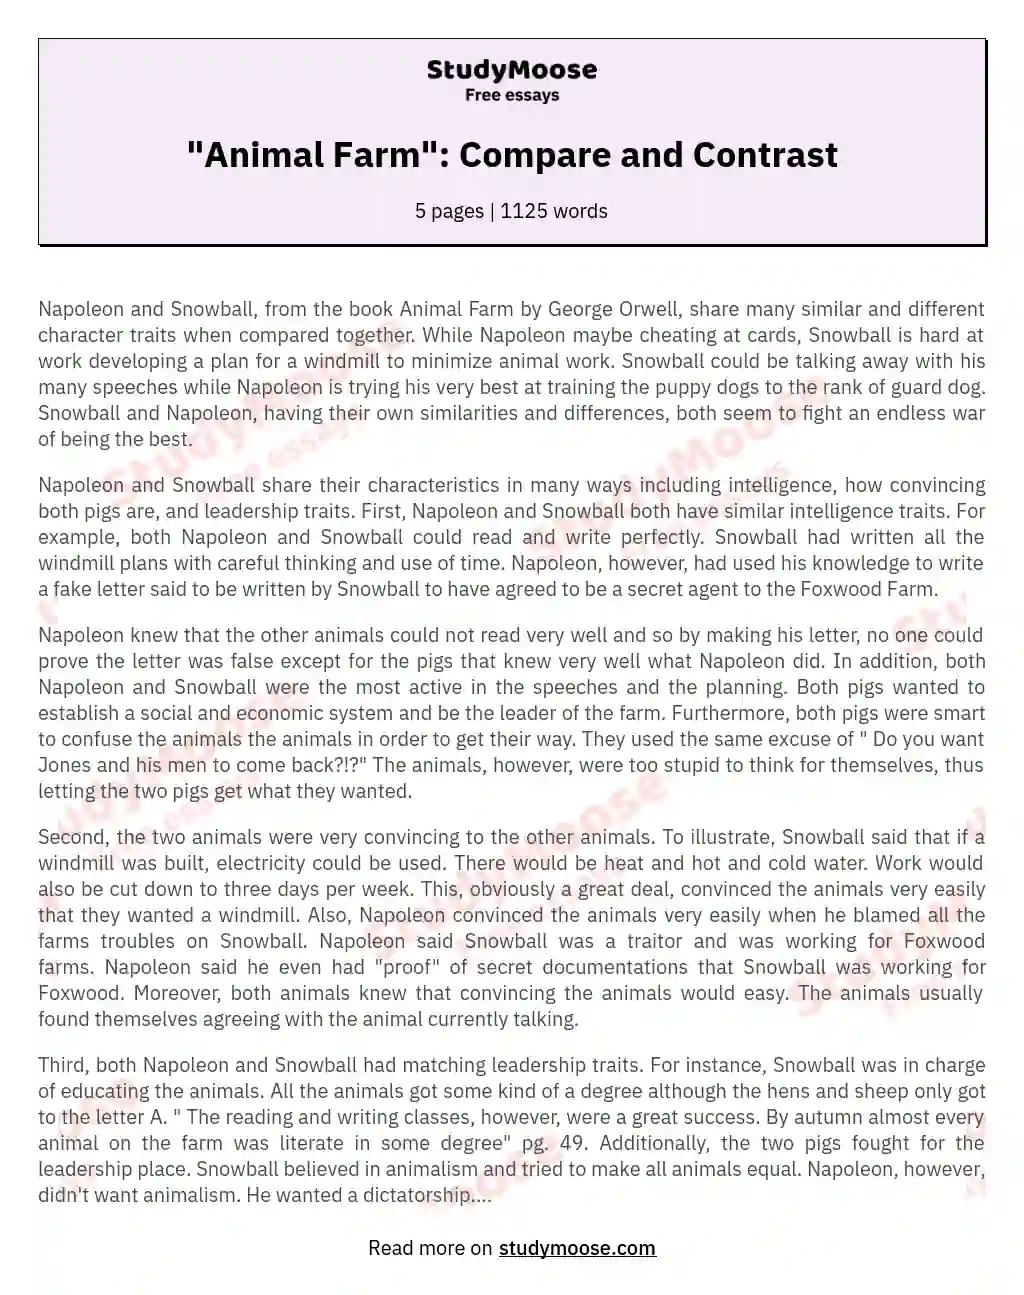 "Animal Farm": Compare and Contrast essay